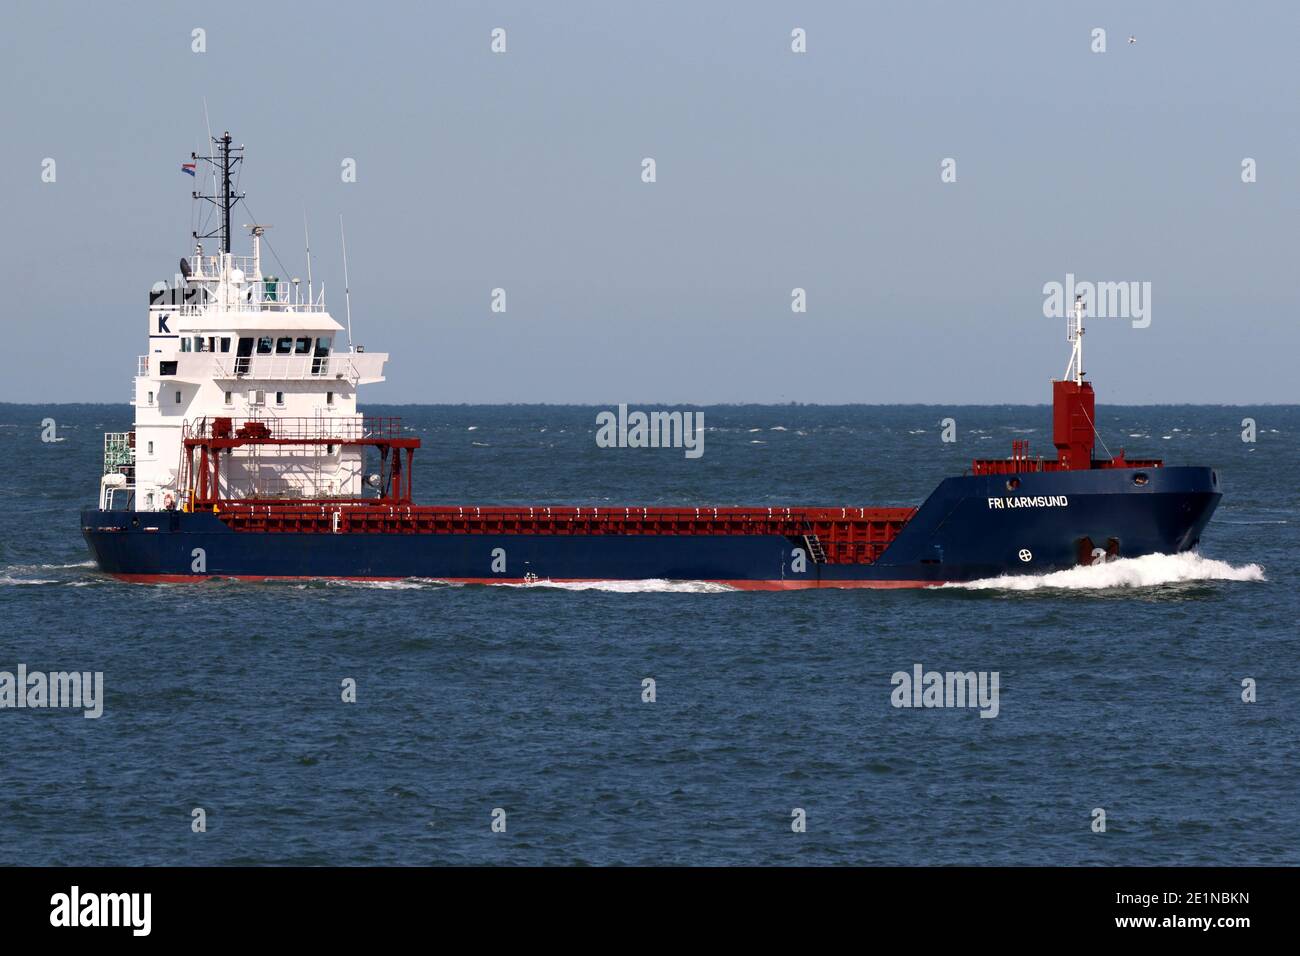 The cargo ship Fri Karmsund will arrive in Rotterdam on September 18, 2020. Stock Photo